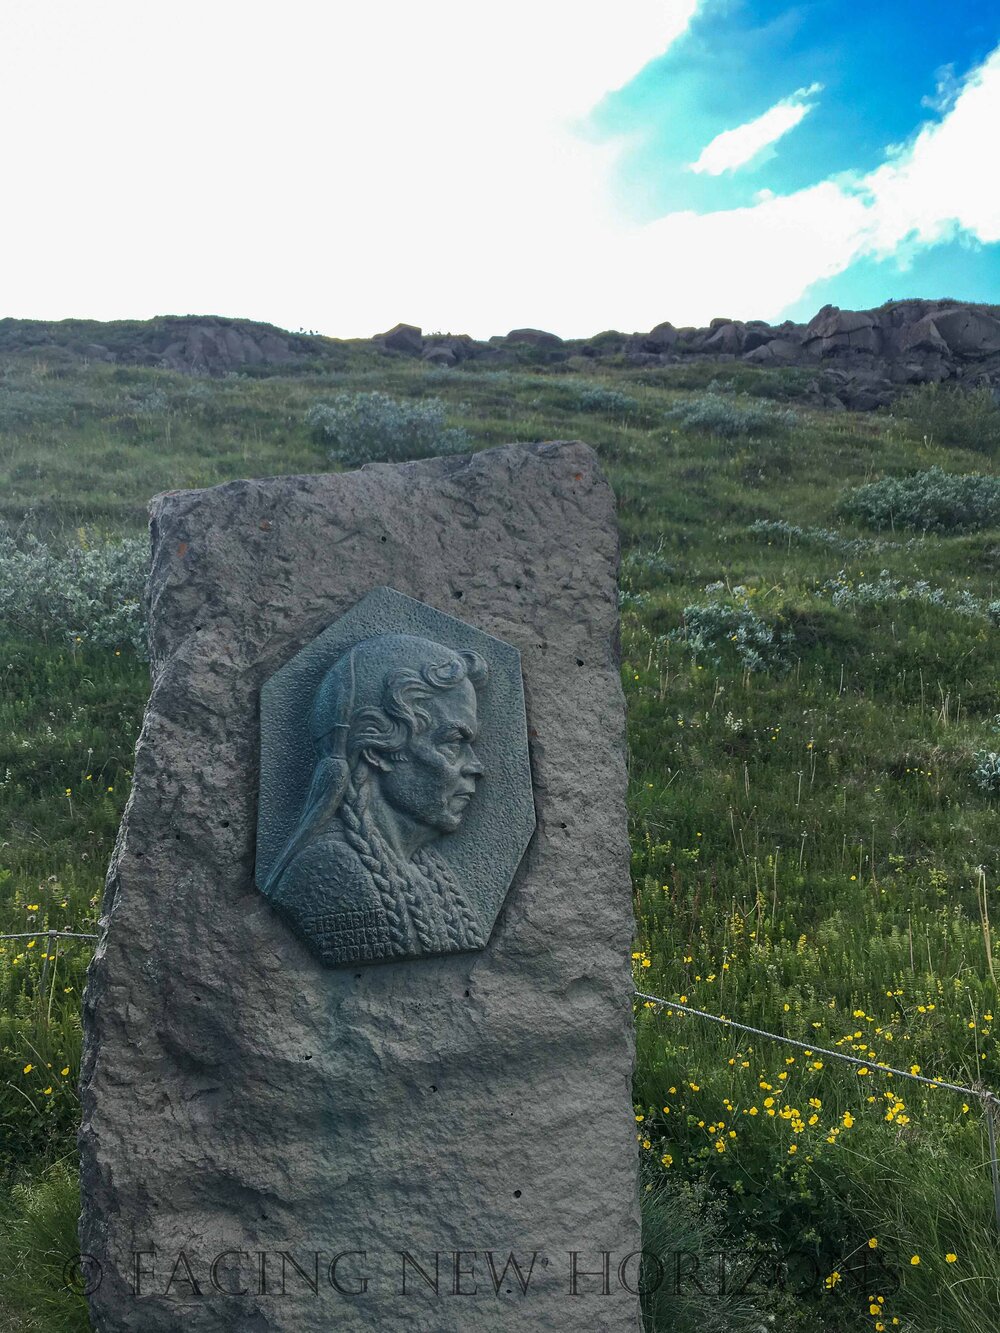  Sigríður Tómasdóttir, the environmentalist hero who fought to preserve Gullfoss from industrial development 